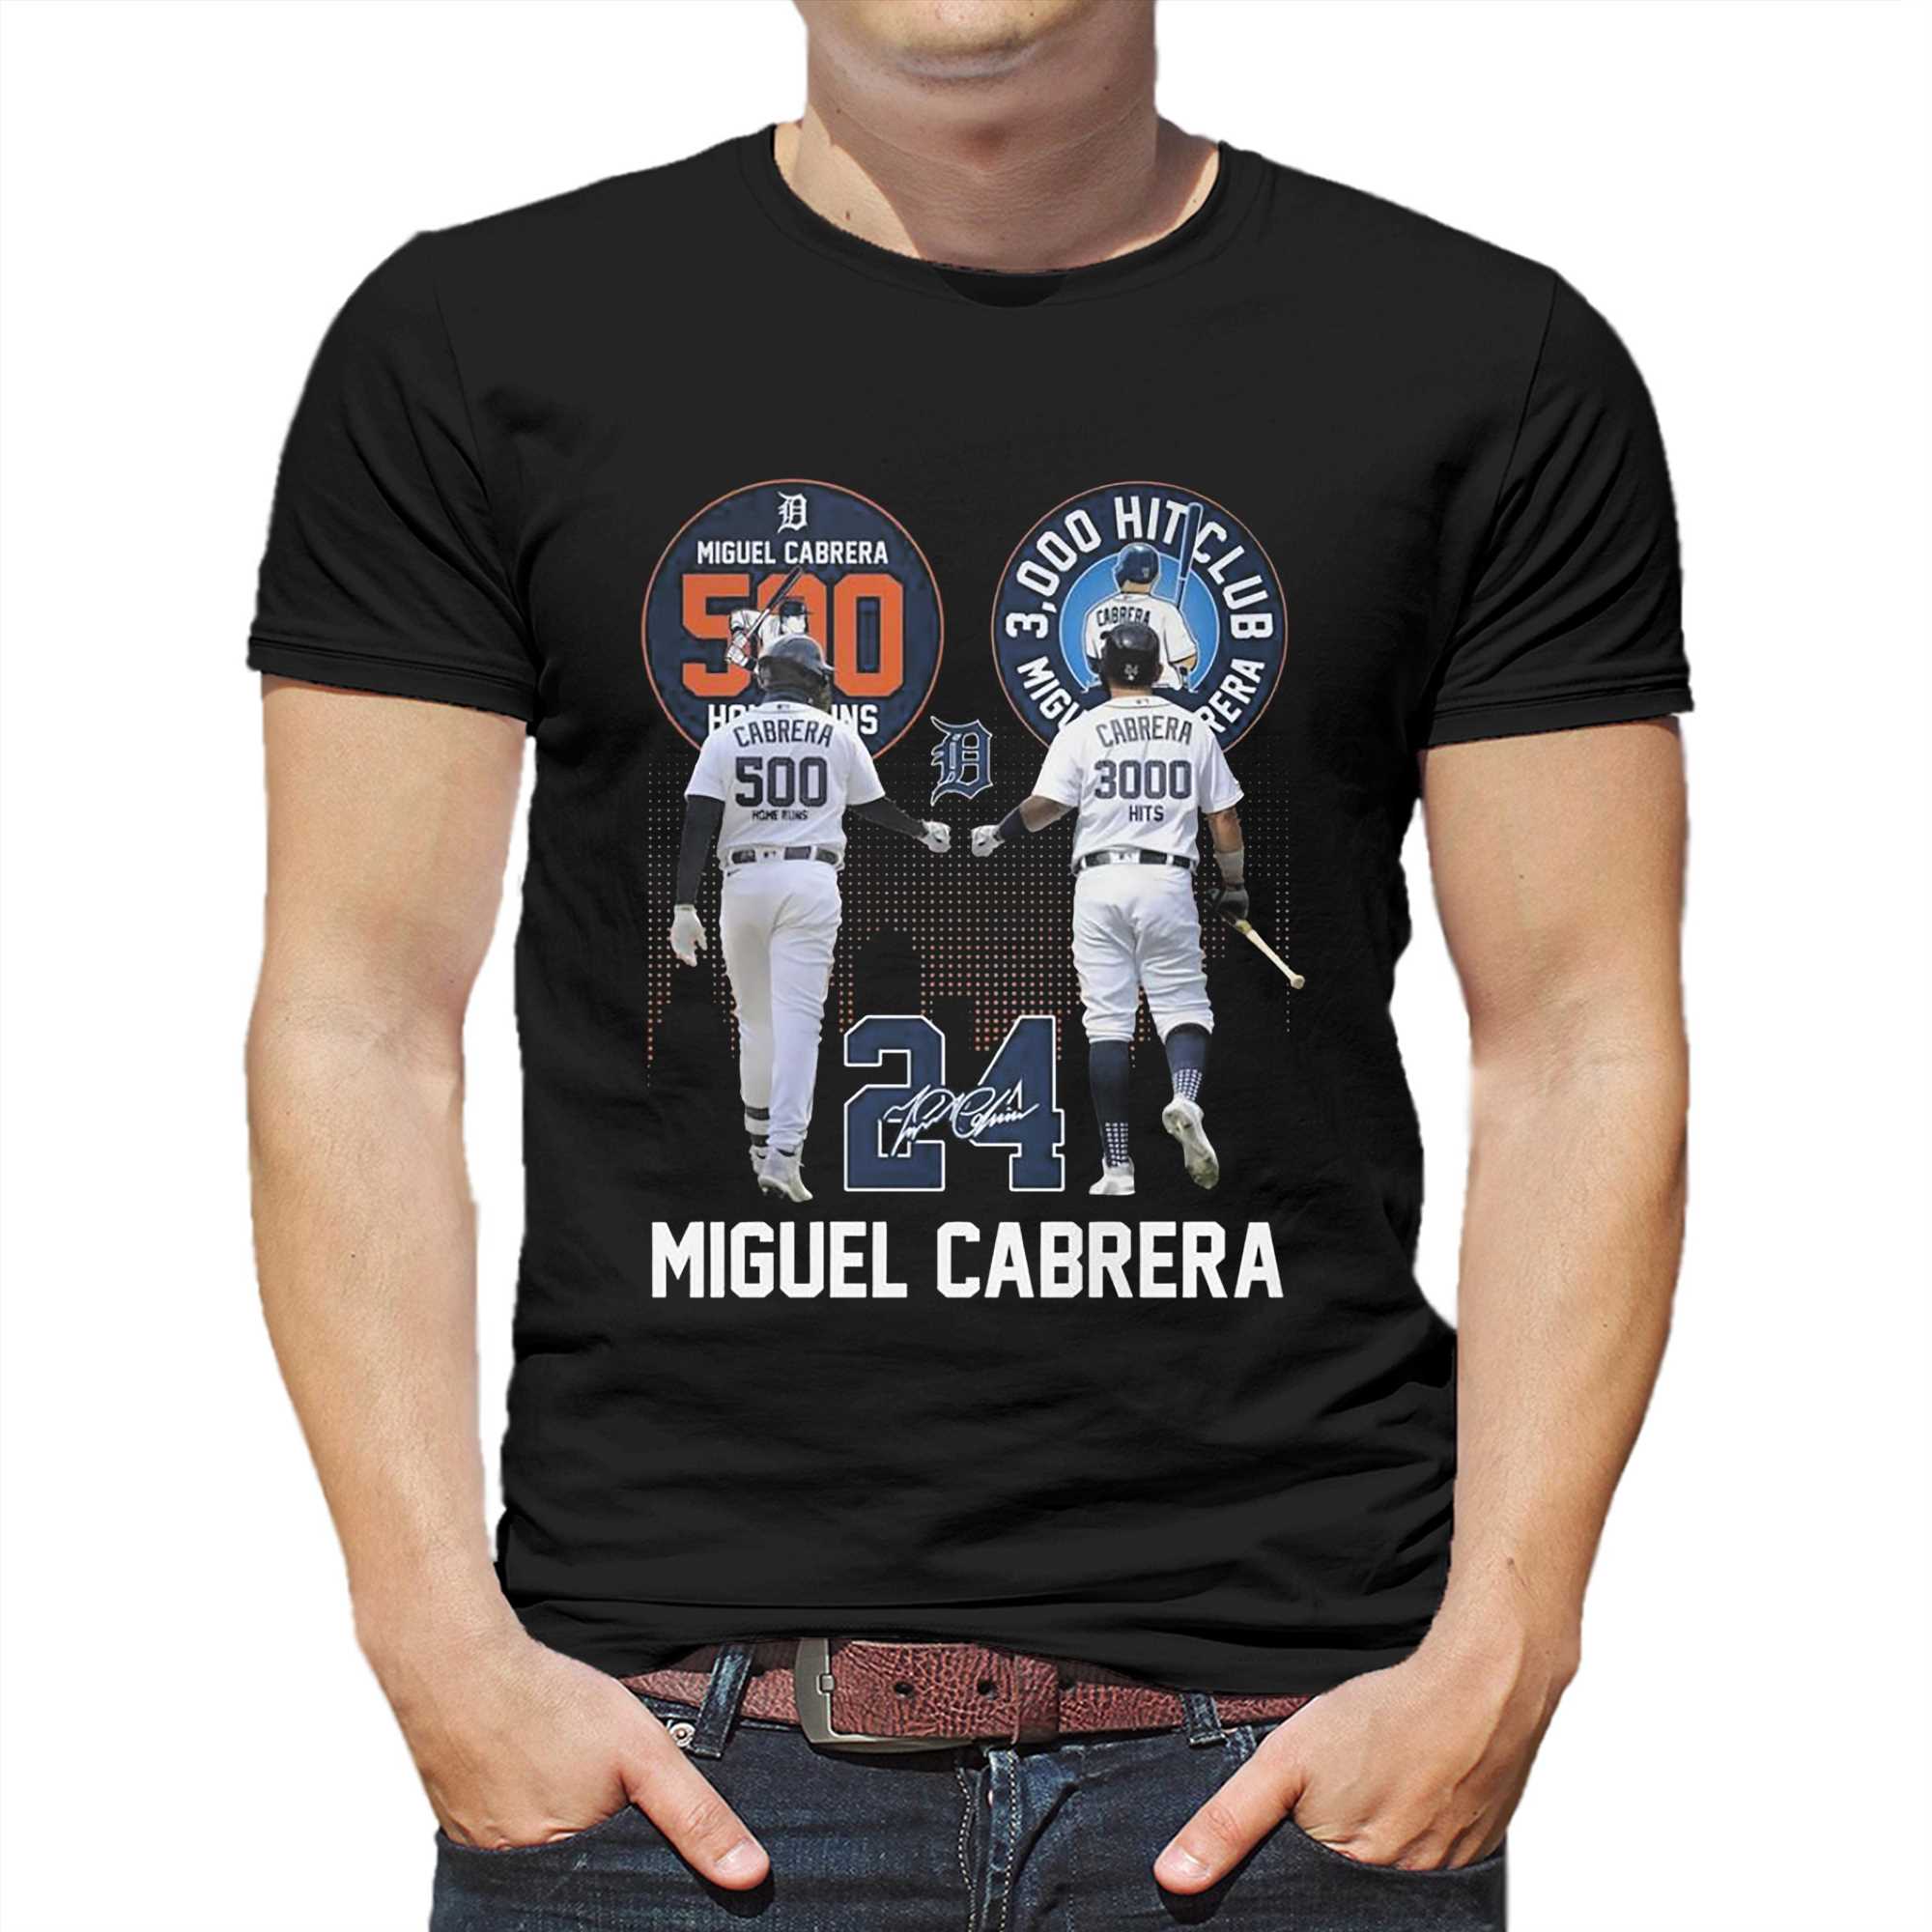 Miguel Cabrera 500 Home Runs 3000 Hits Club Baseball shirt - teejeep